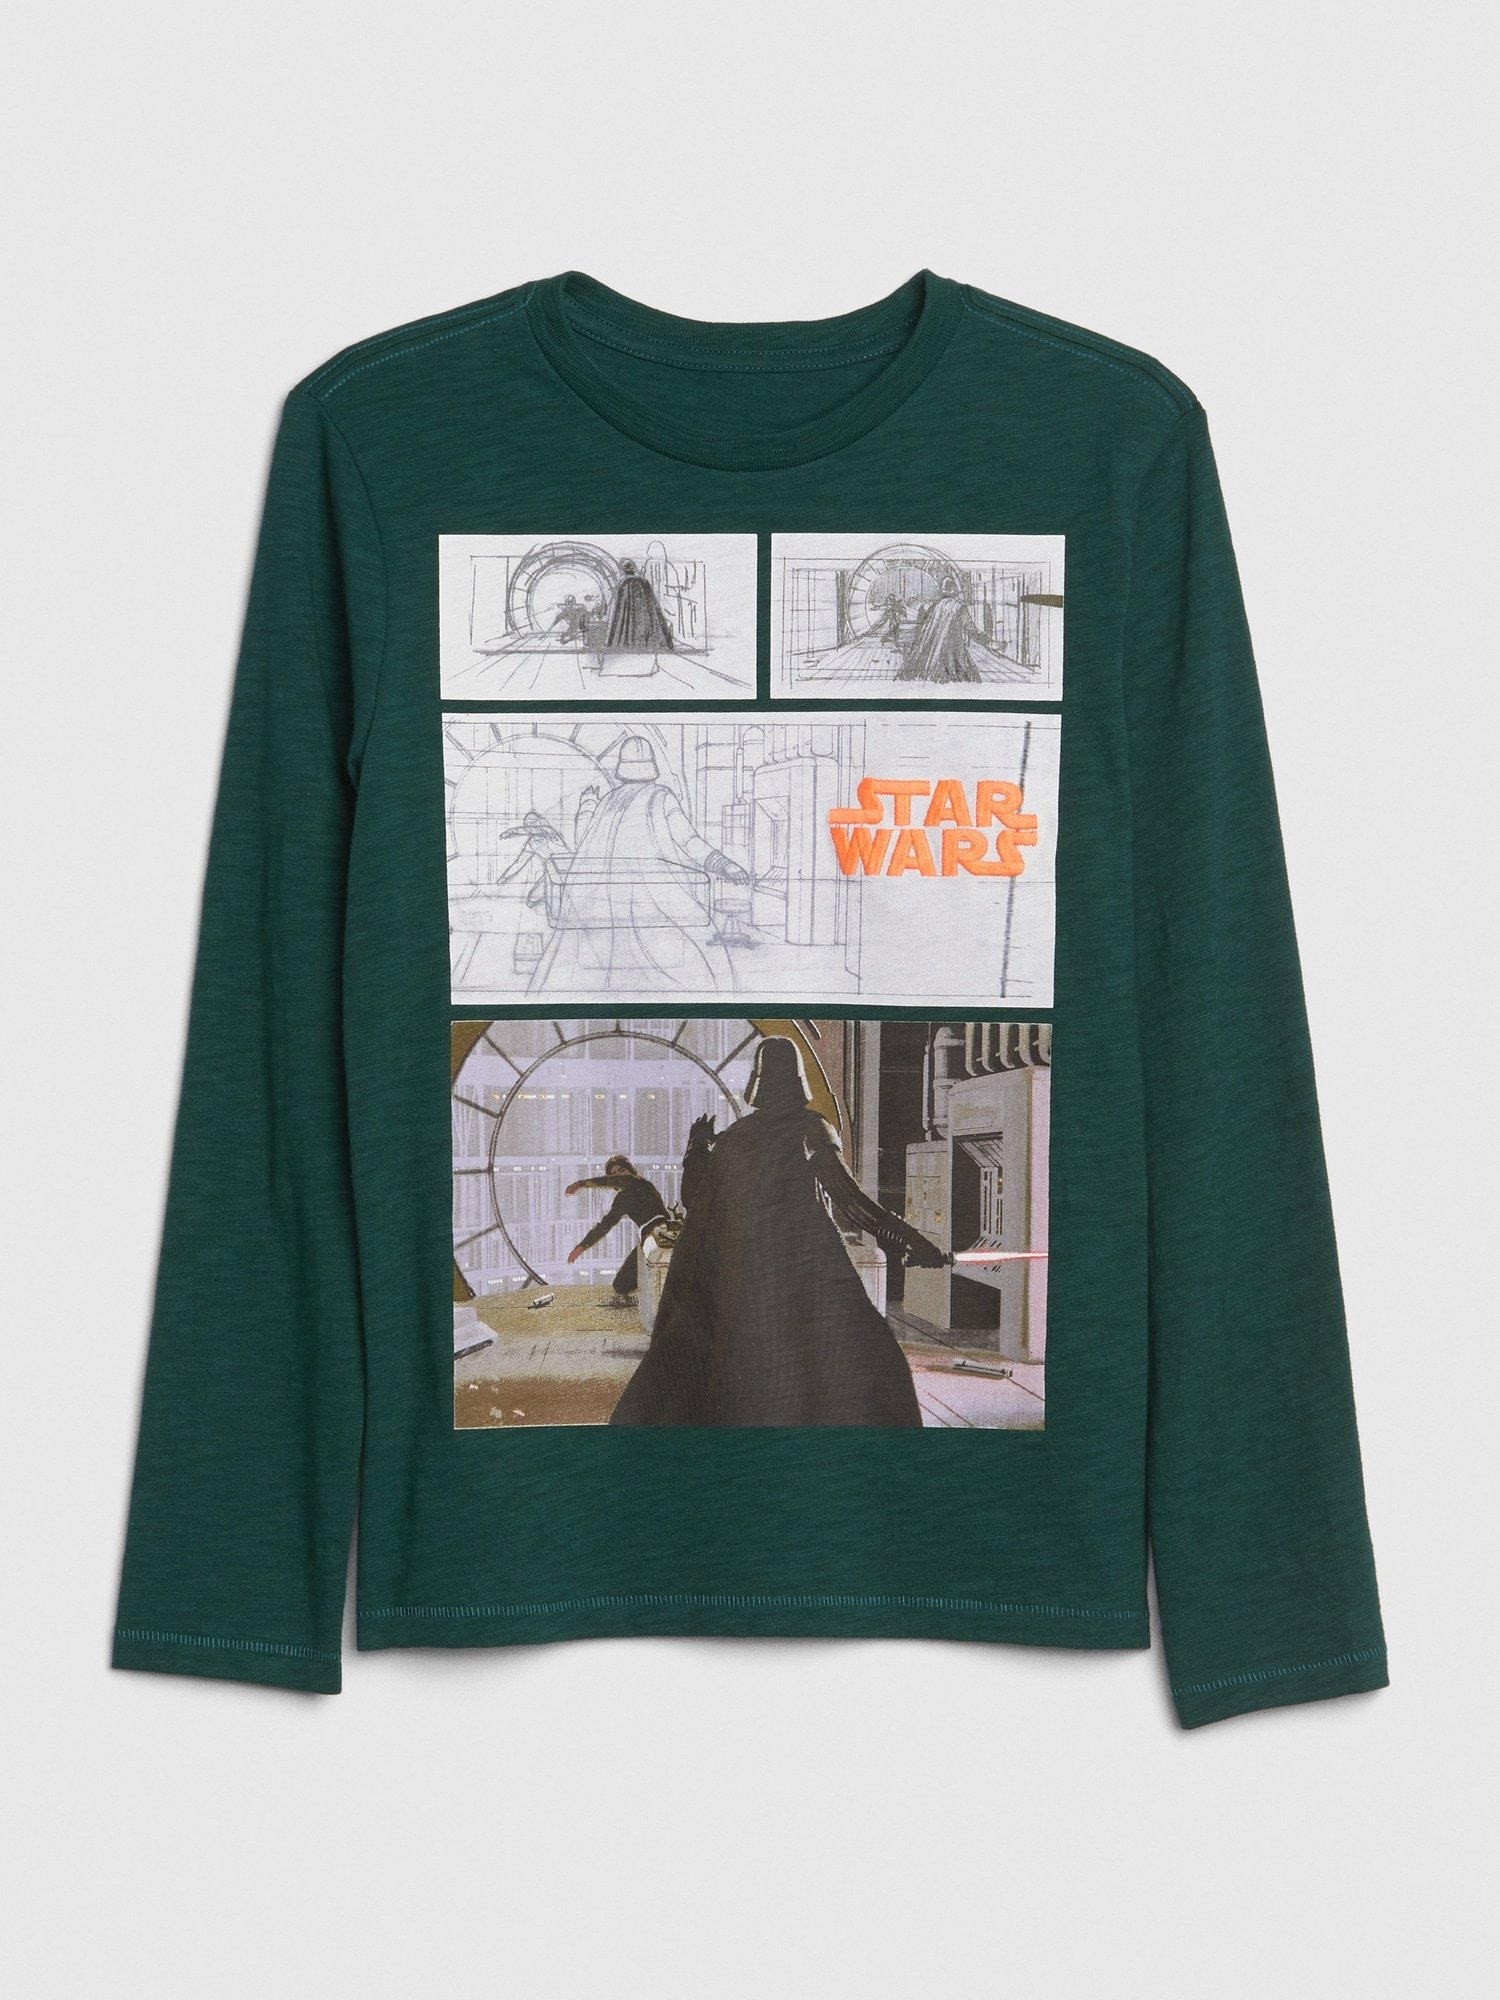 Star Wars™ T-Shirt product image